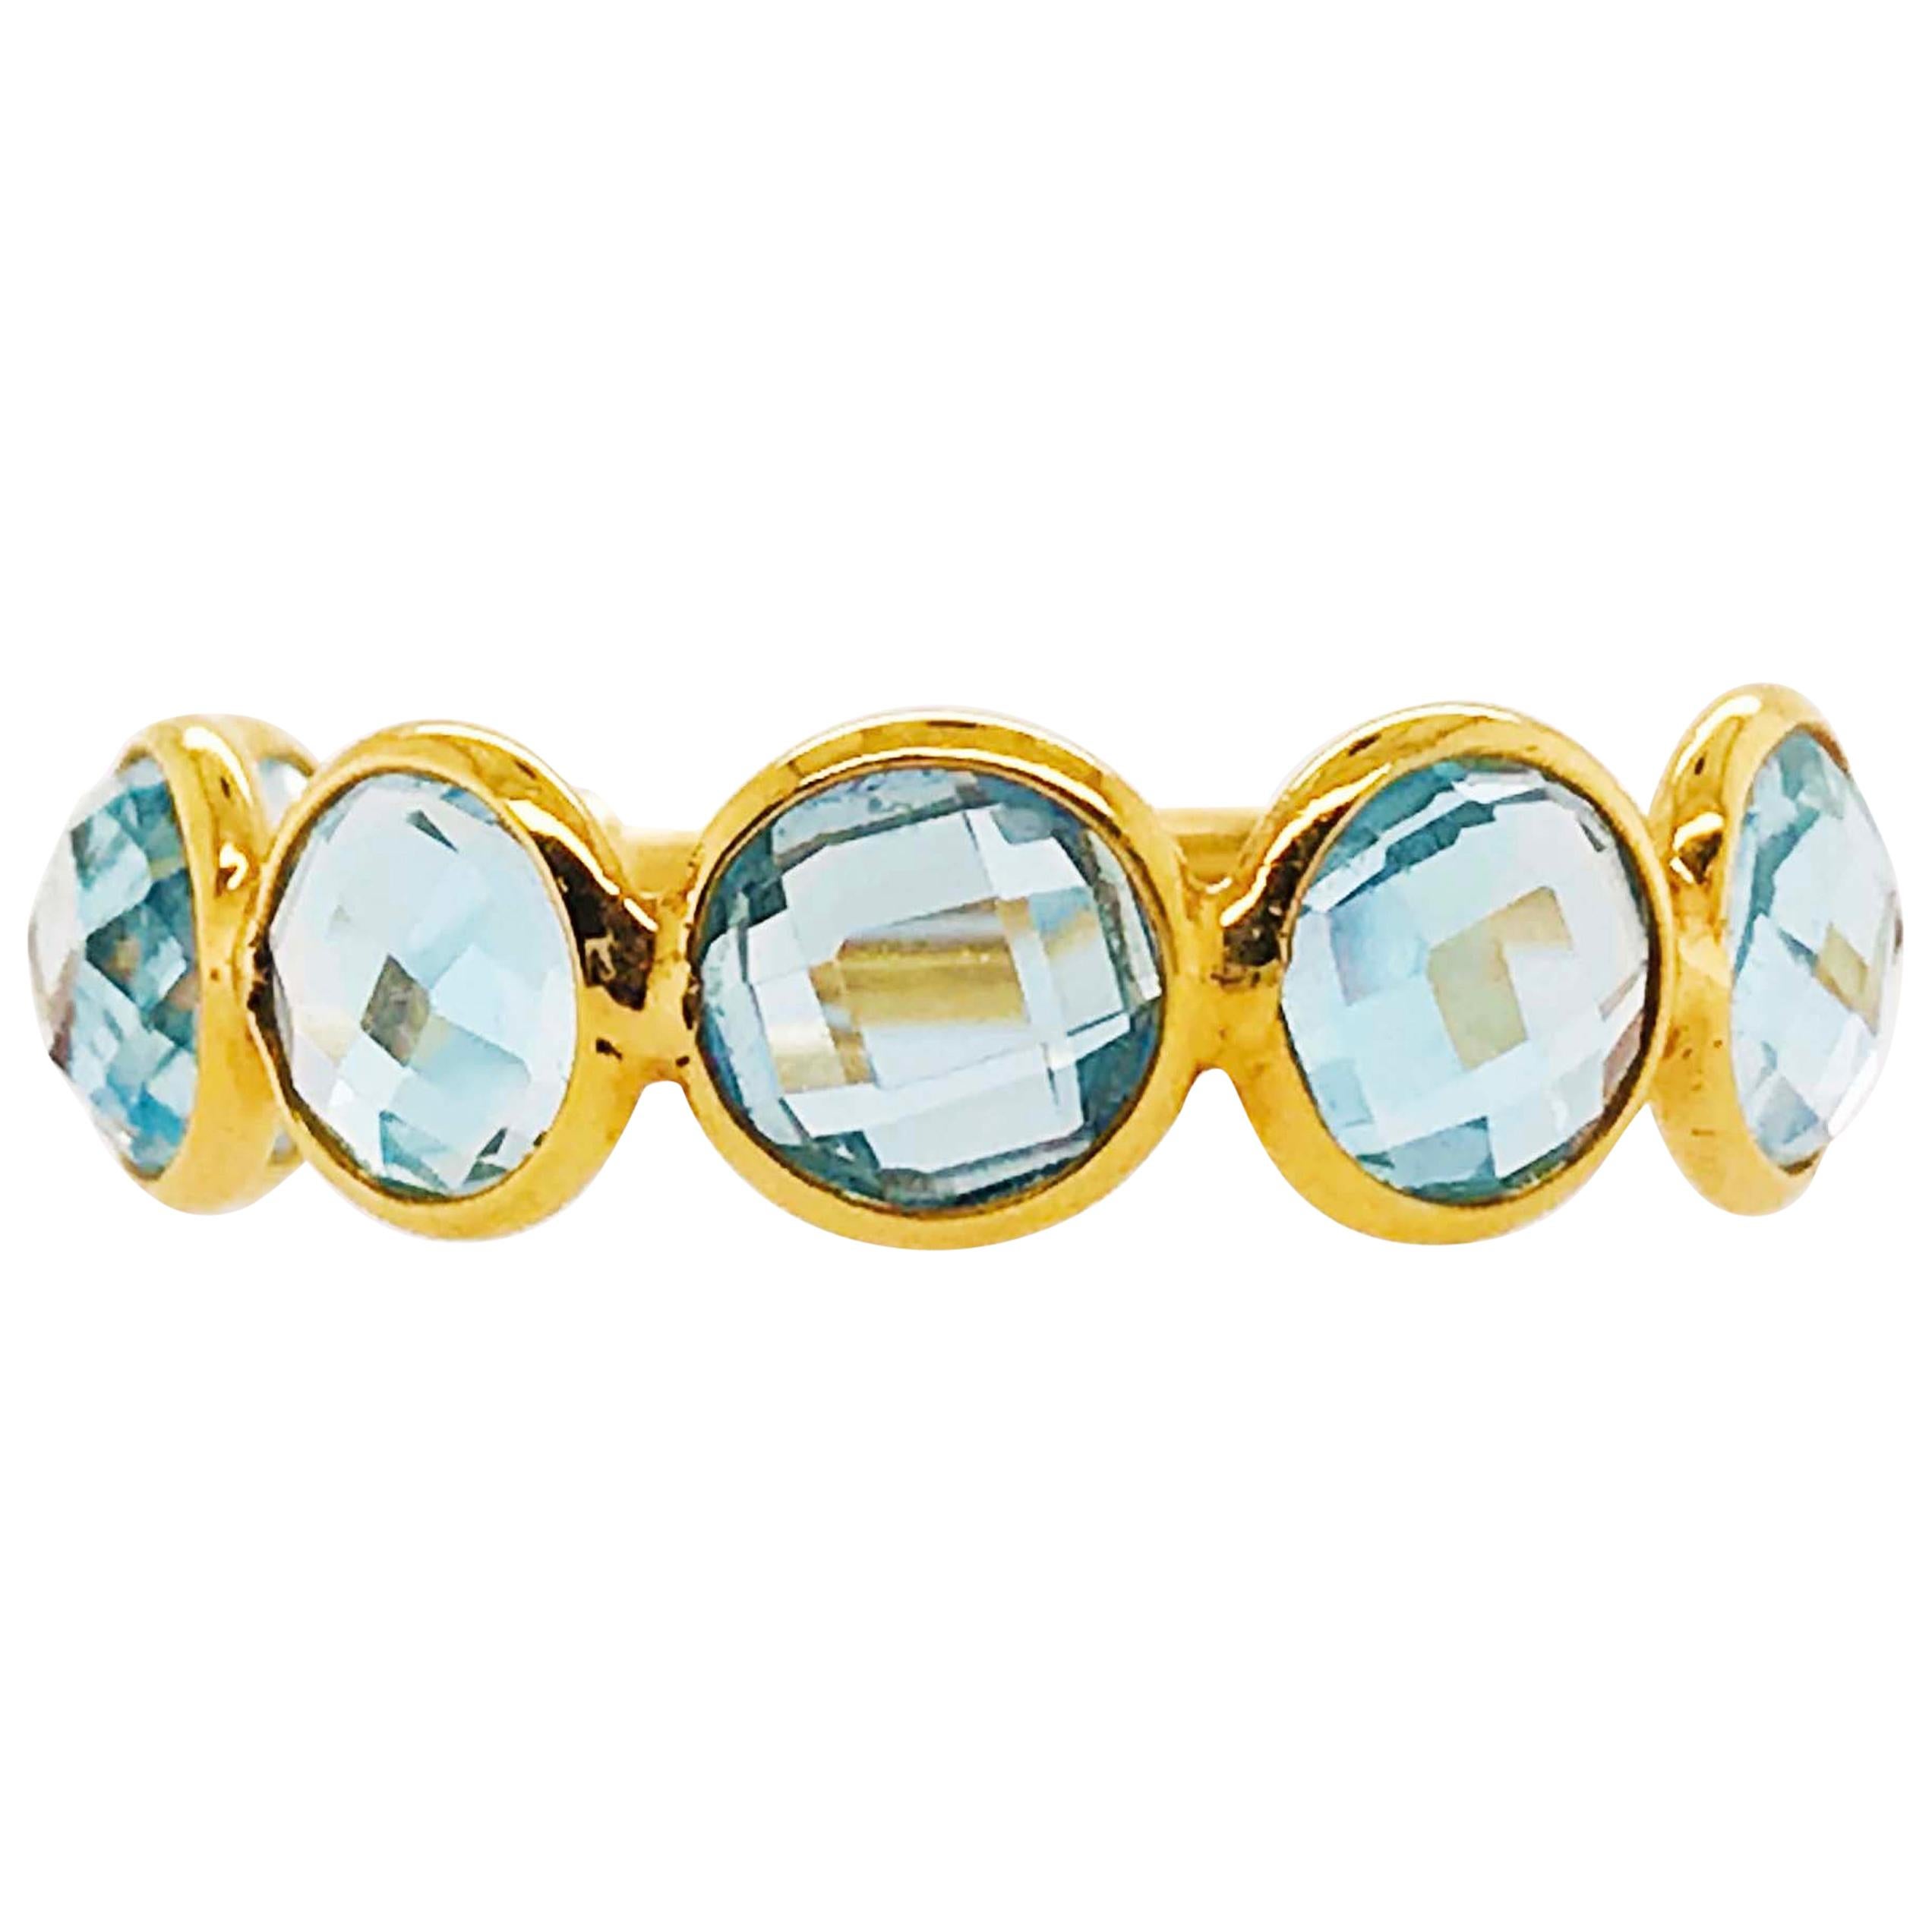 Blue Topaz Ring, Adjustable Ring in 18 Karat Gold 4 Carat Blue Topaz Gemstone